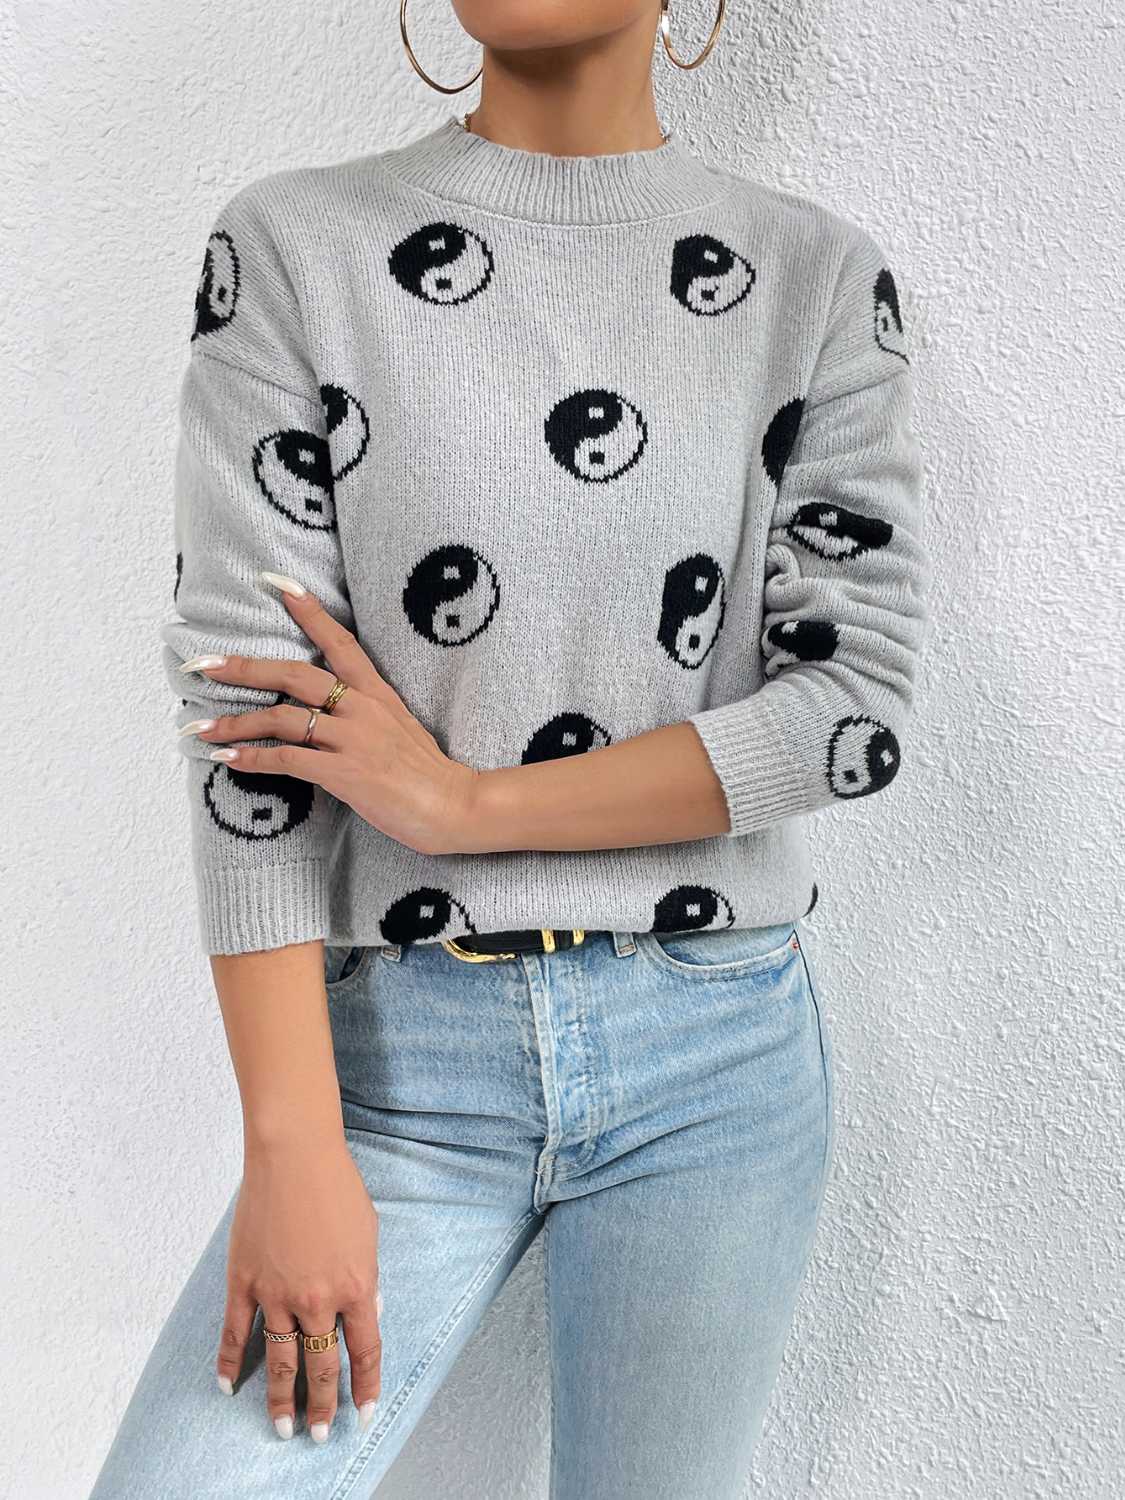 Unique Print Knit Pullover Celestial Mushroom Skull Yin Yang Sweater Shirt